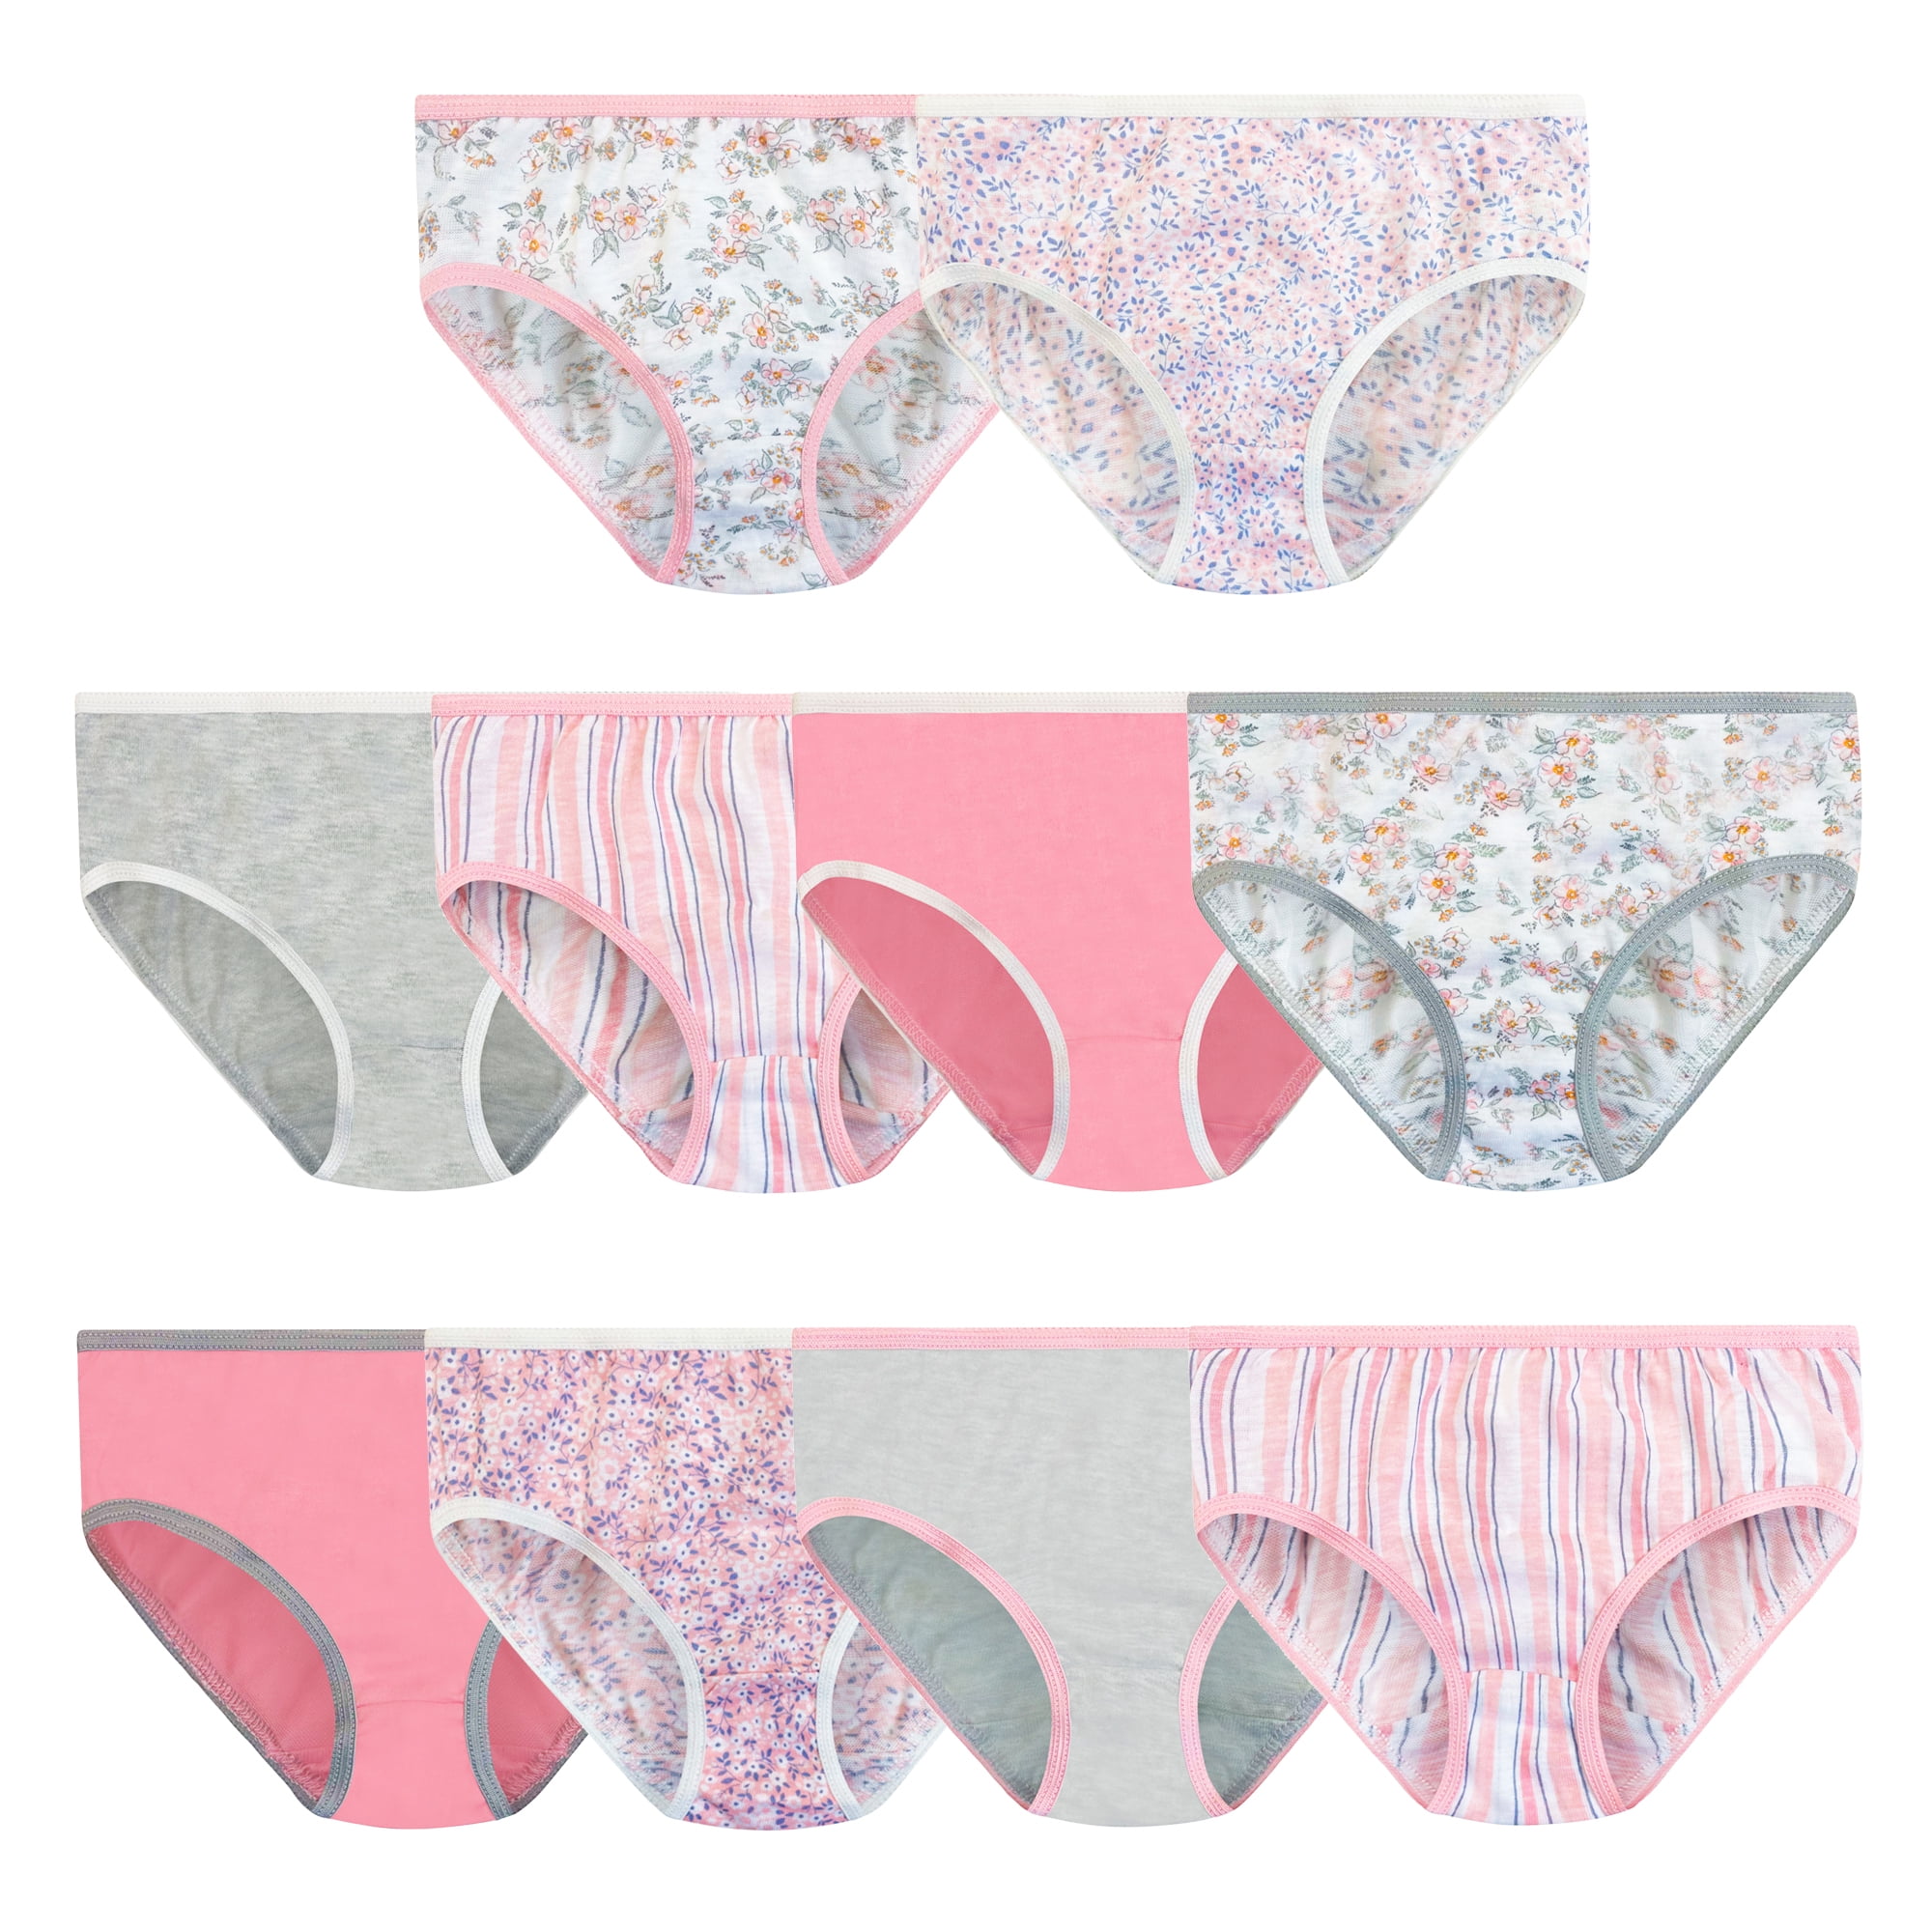 Jessica Simpson Girls Underwear, 10 Pack Kids Panties, Sizes 4-12